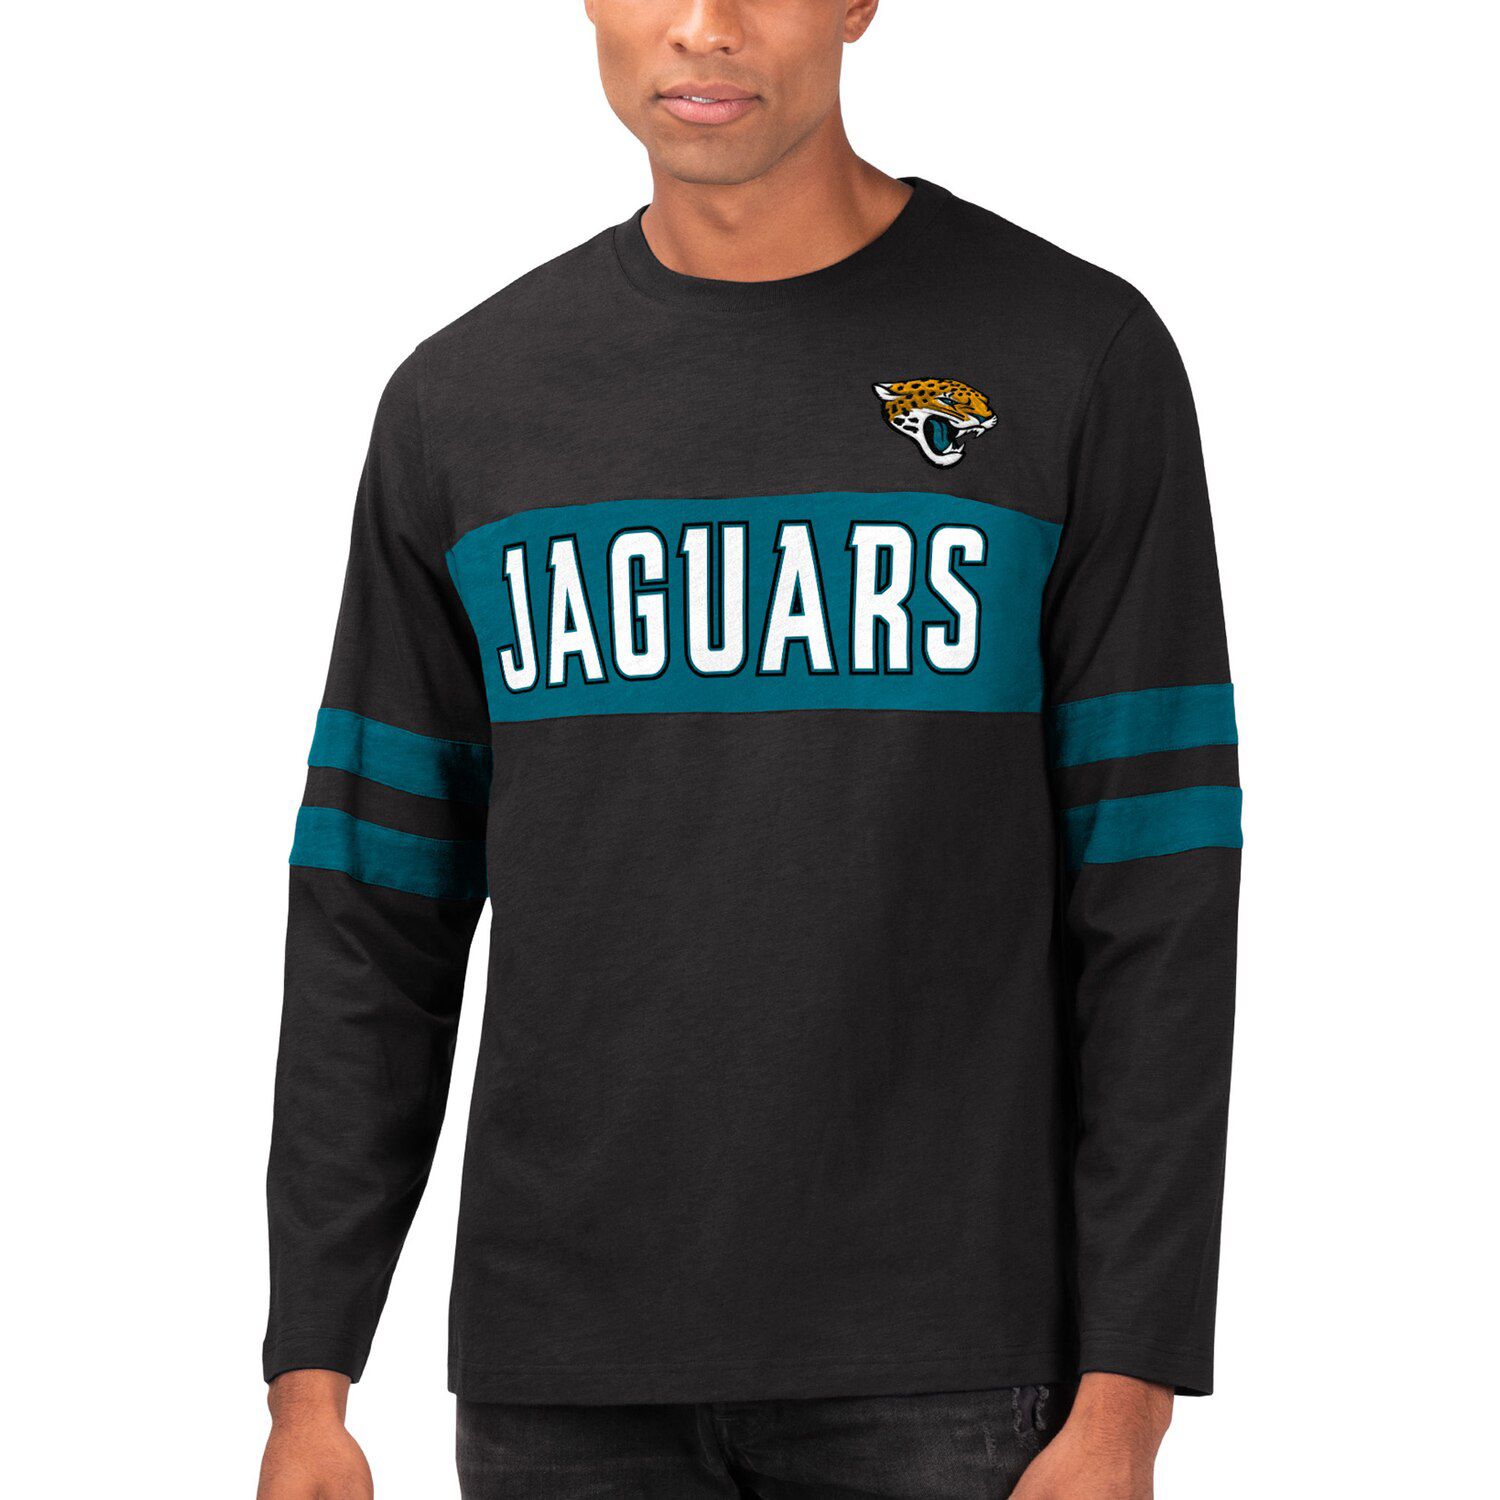 jacksonville jaguars long sleeve t shirts